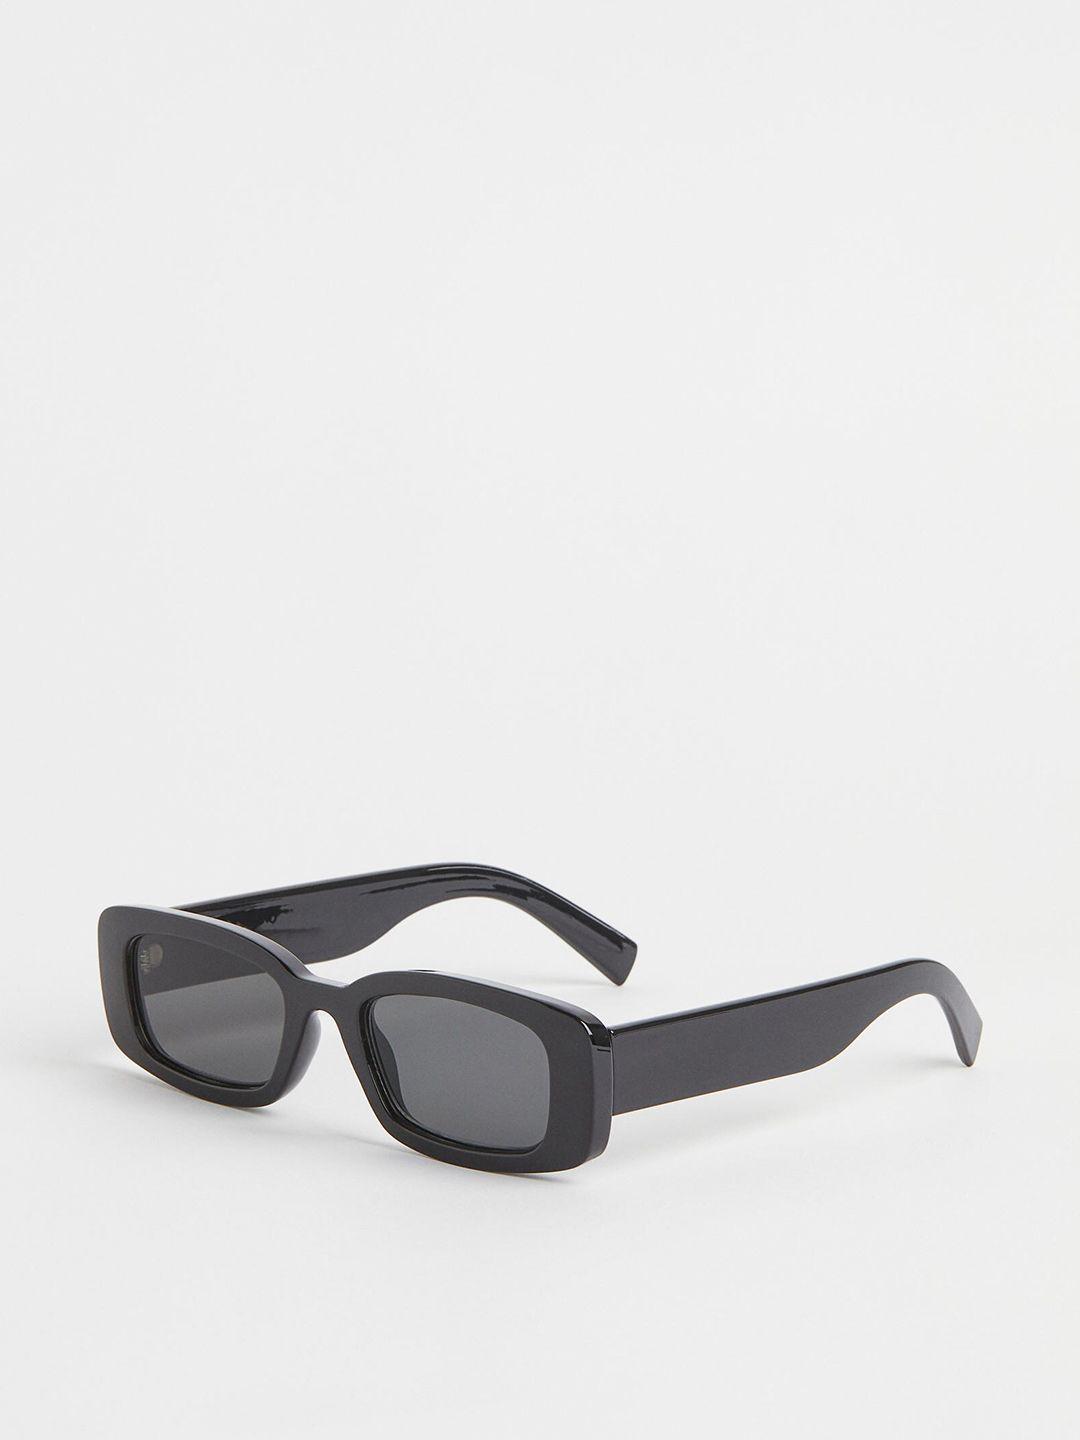 h&m women black rectangular sunglasses 1071879001